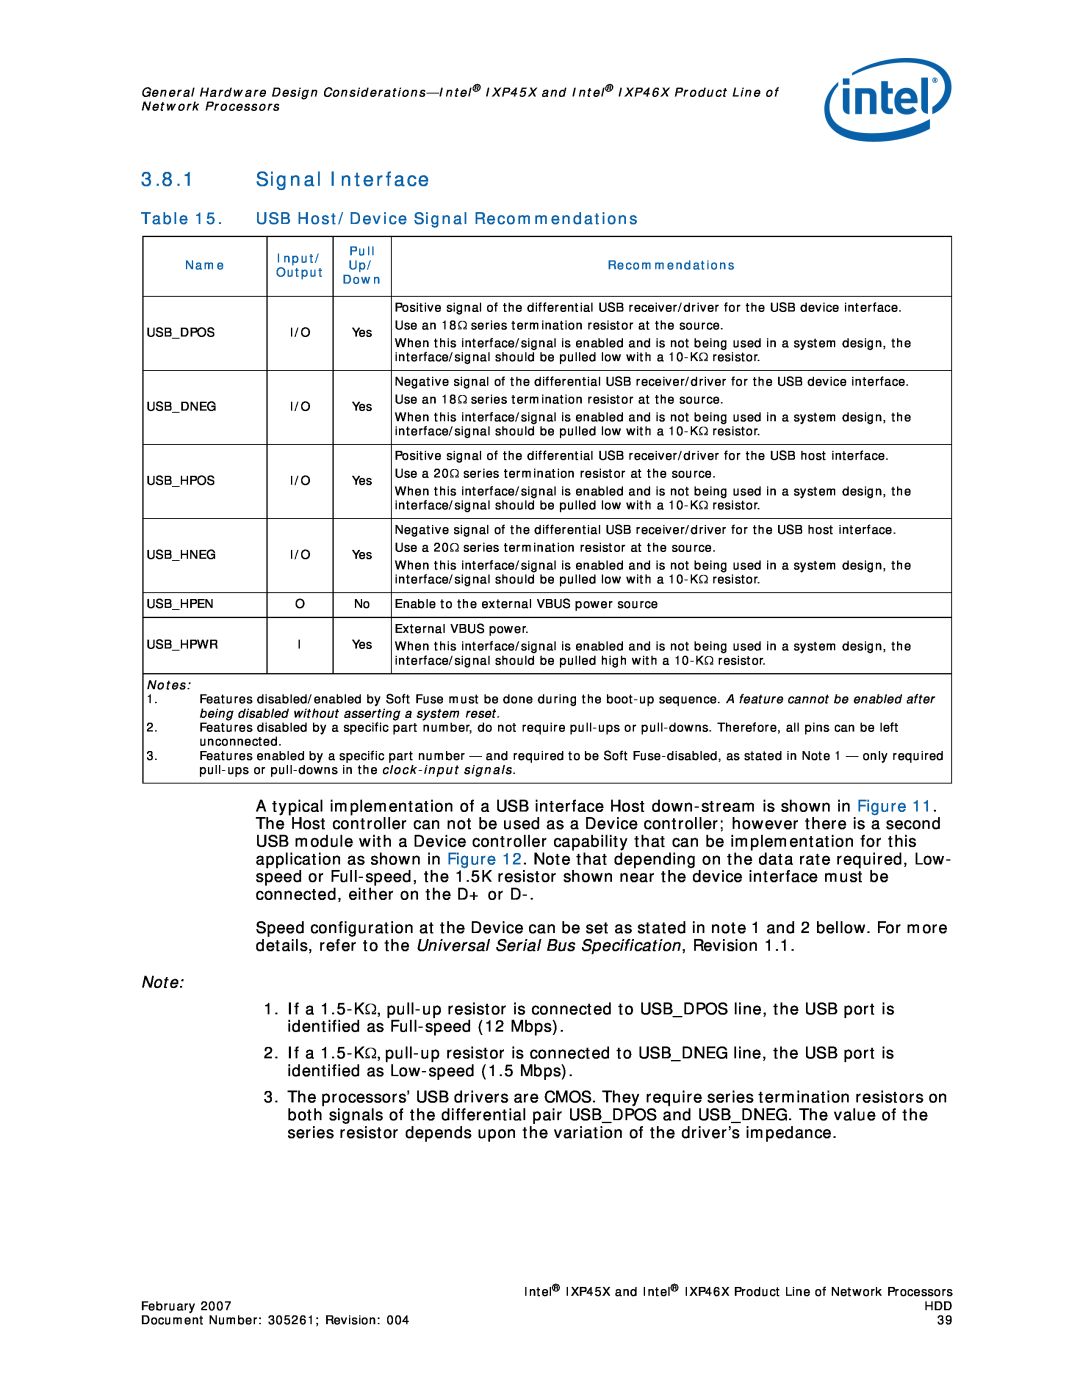 Intel IXP45X, IXP46X manual 3.8.1Signal Interface, USB Host/Device Signal Recommendations 